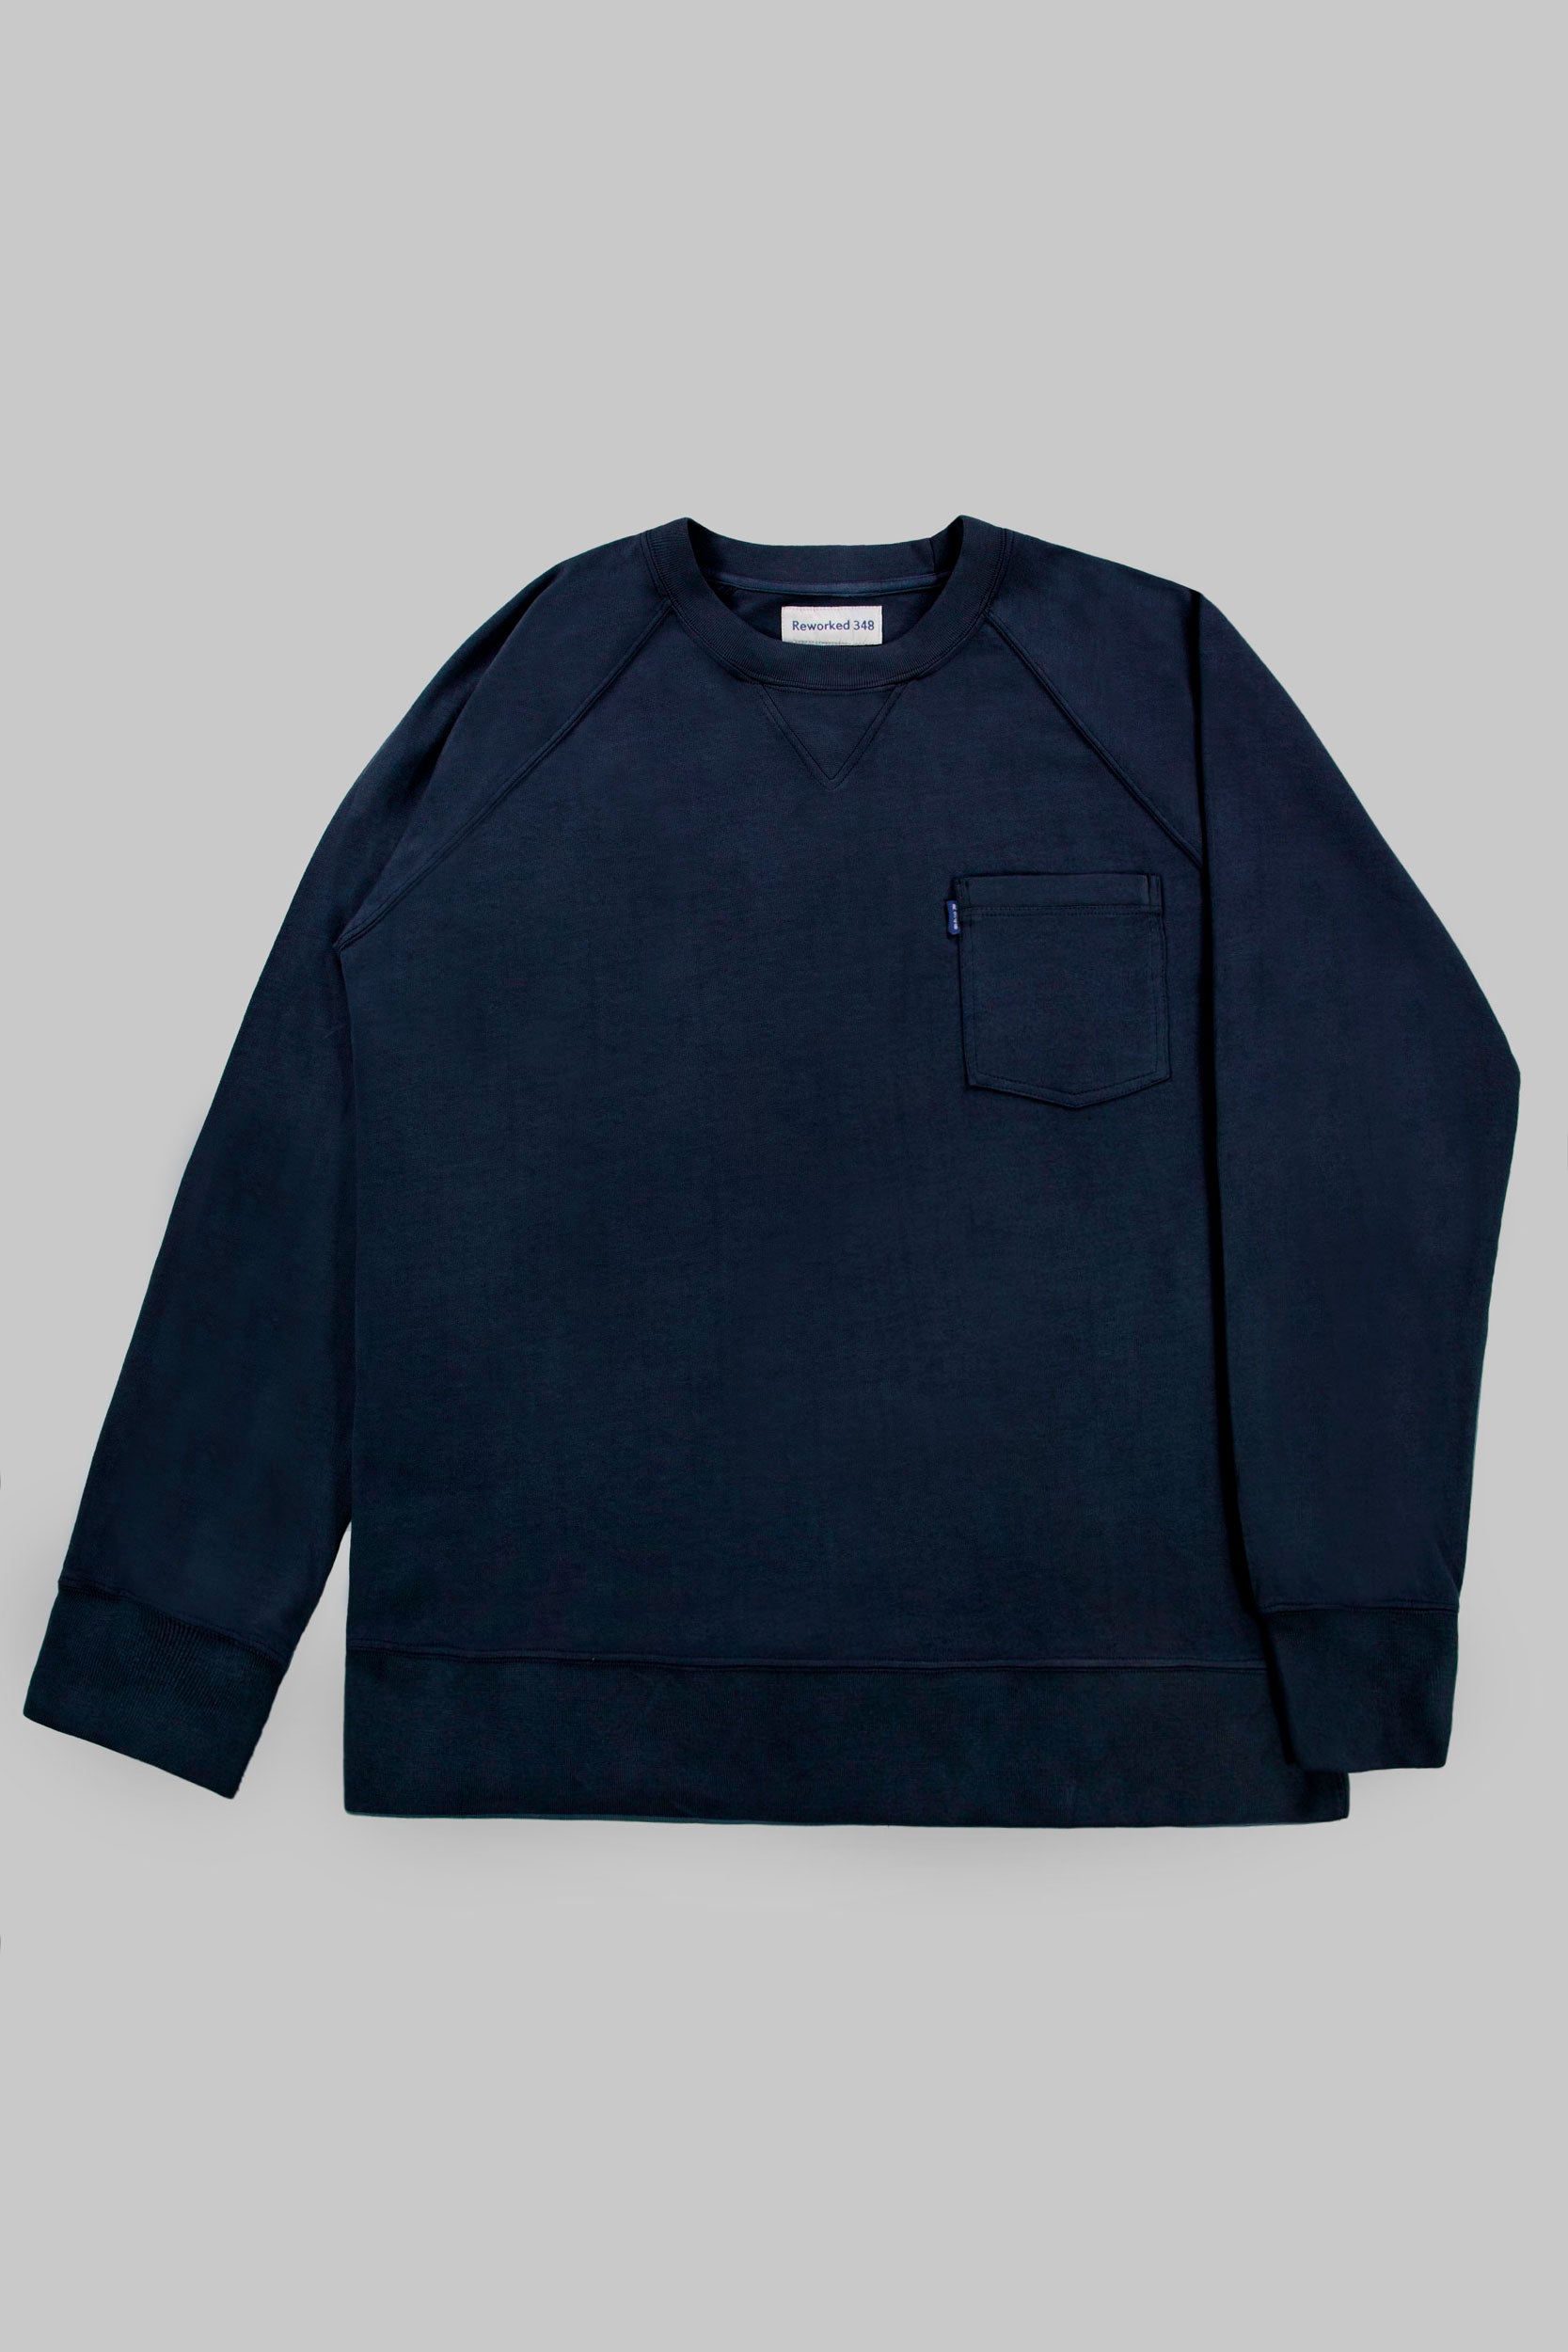 Middle Weight Pocket Sweatshirt Blue Black